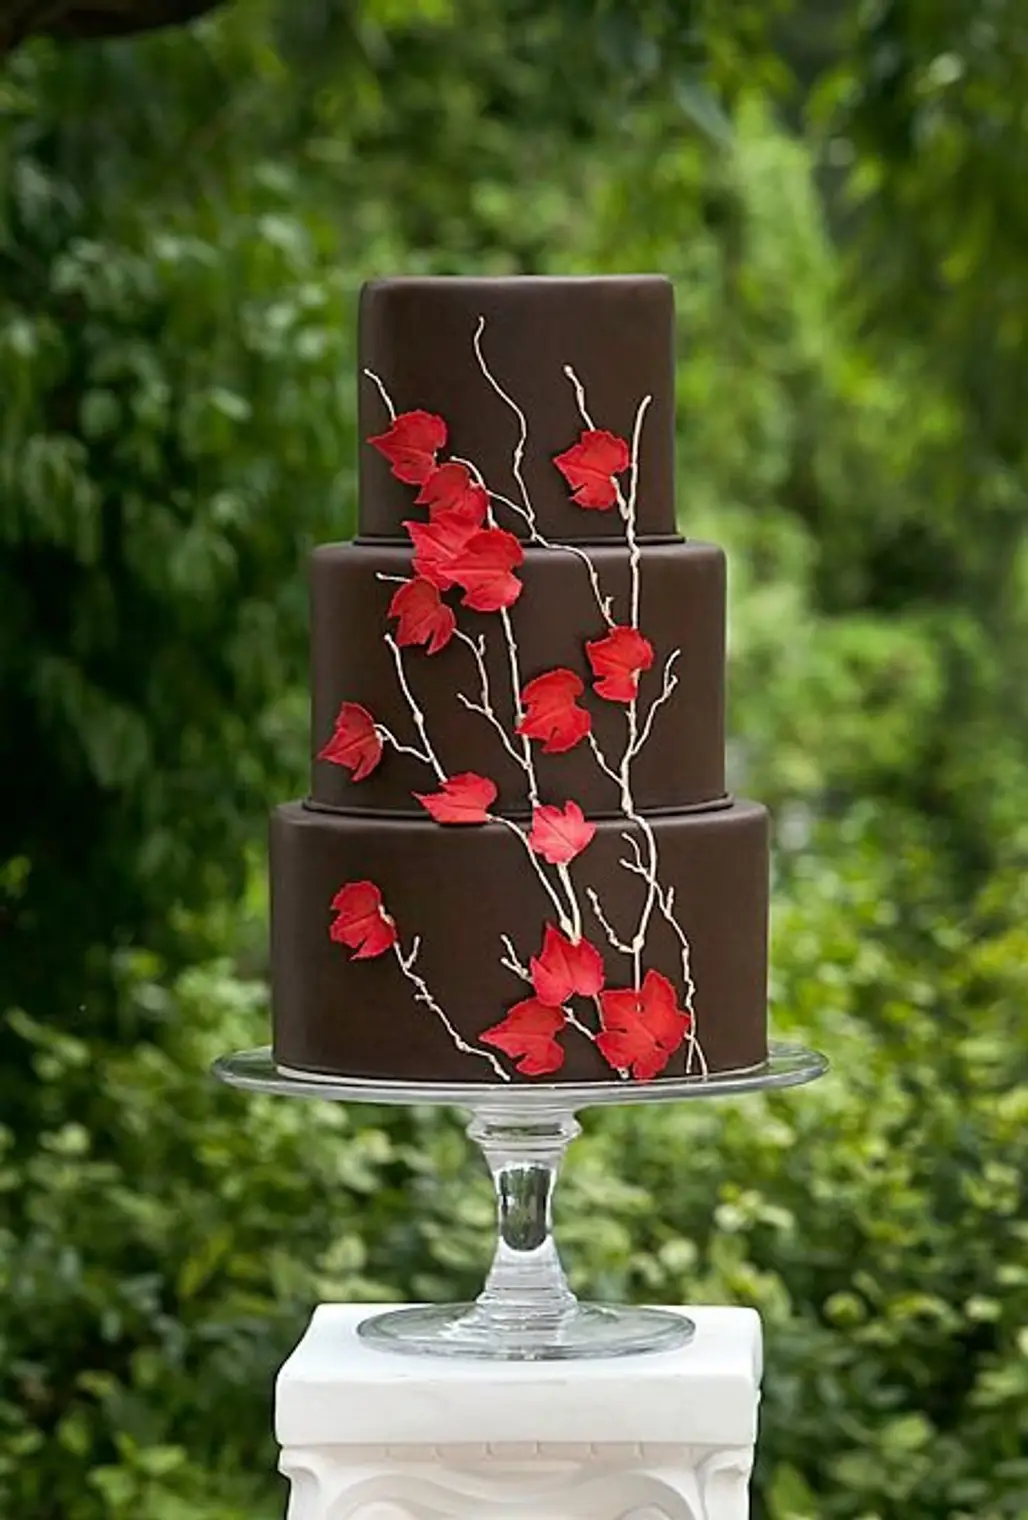 Chocolate Fondant for Your Wedding Cake